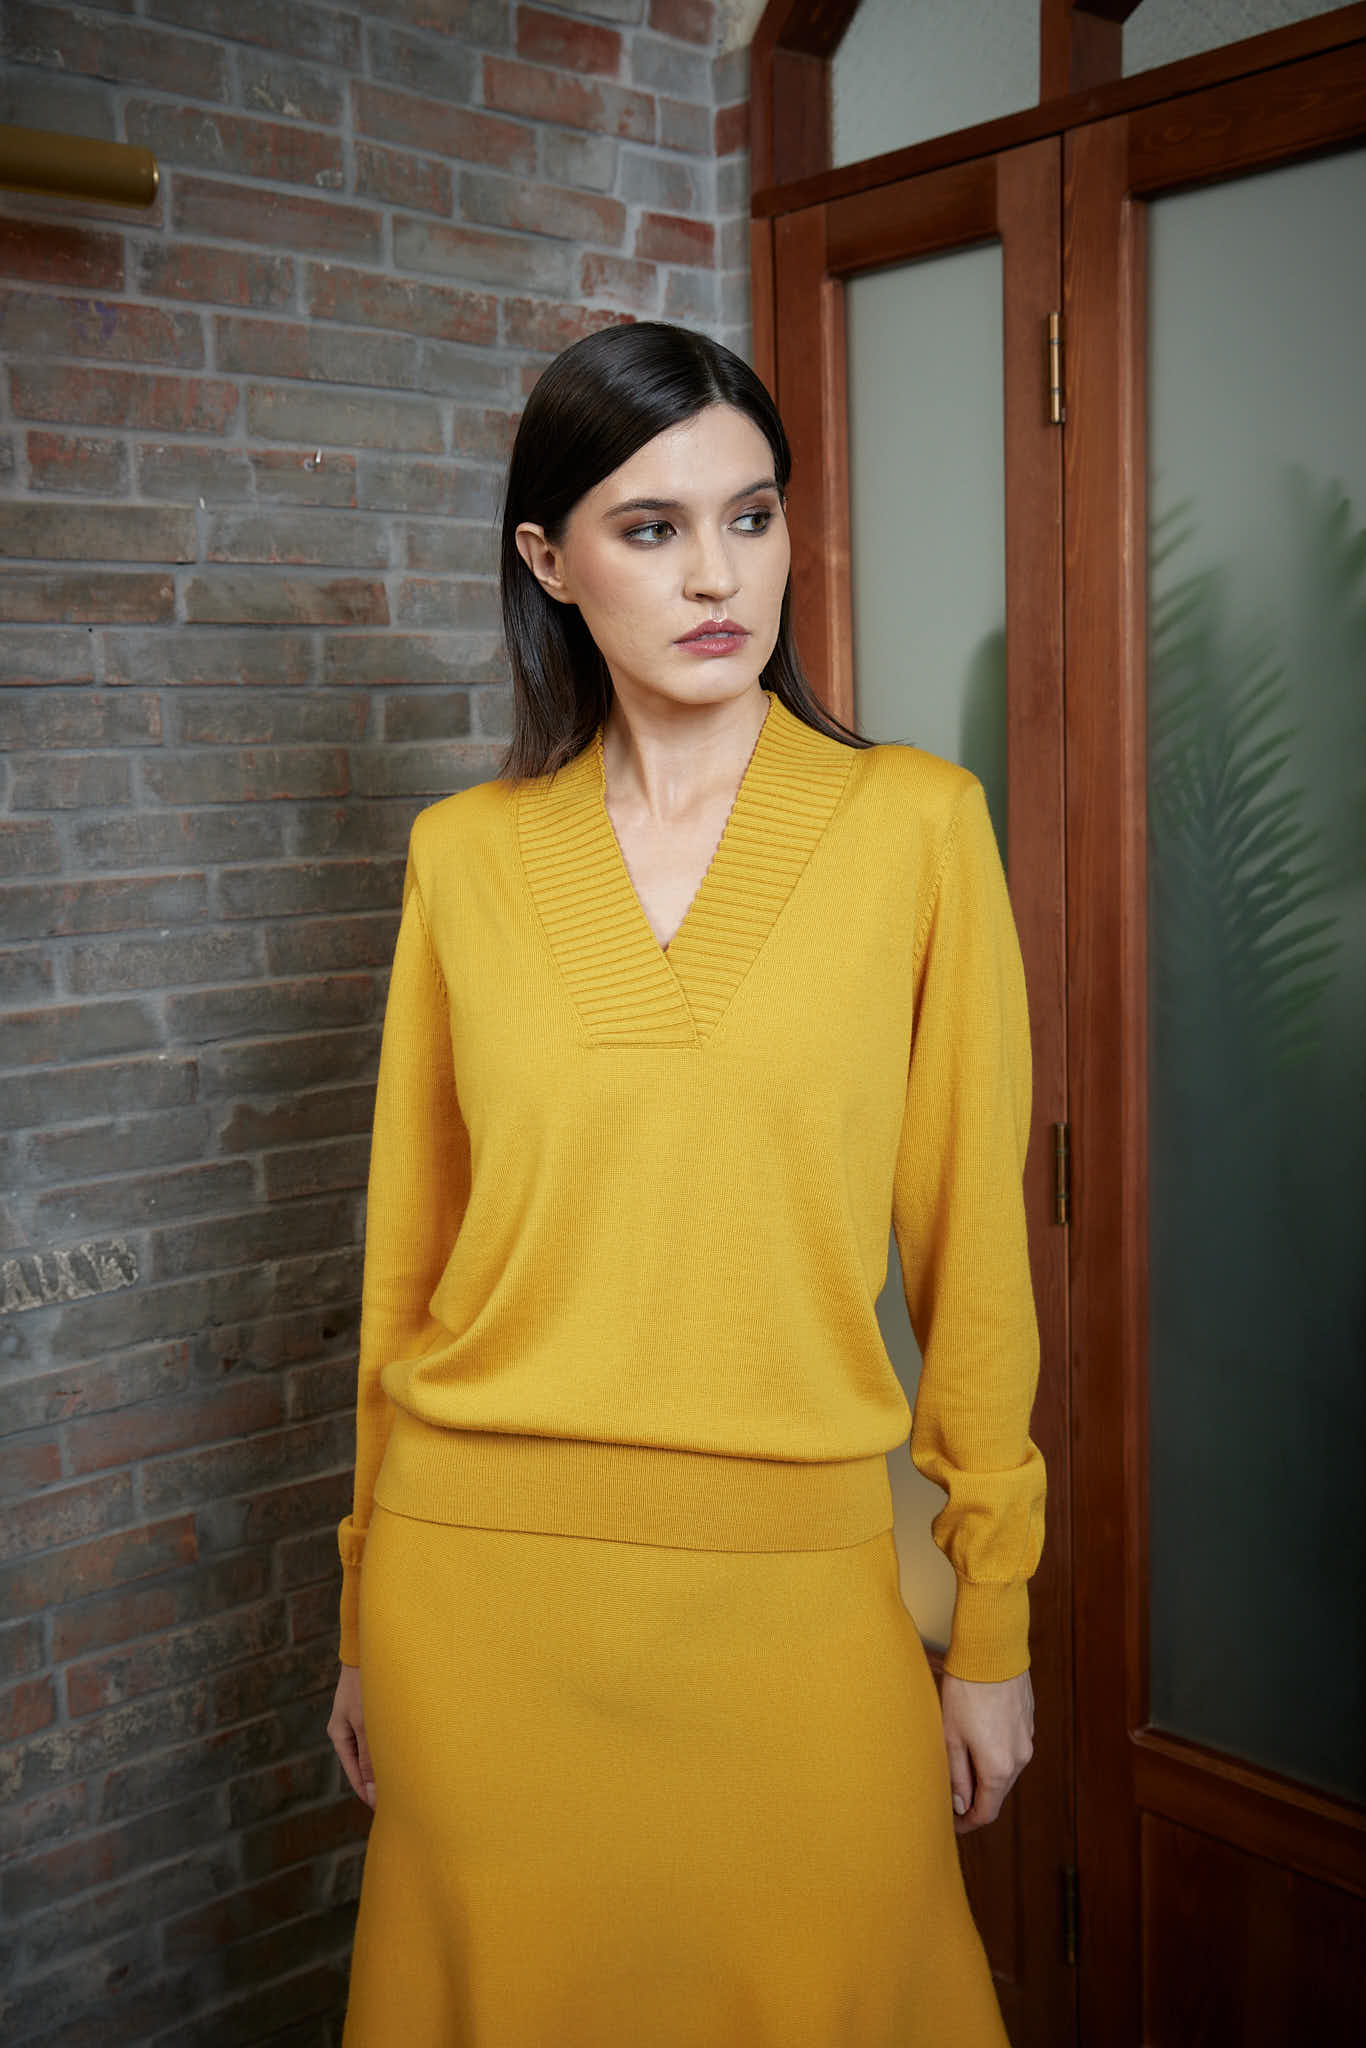 Marinha Grande Top – V-neck sweater in ochre yellow0